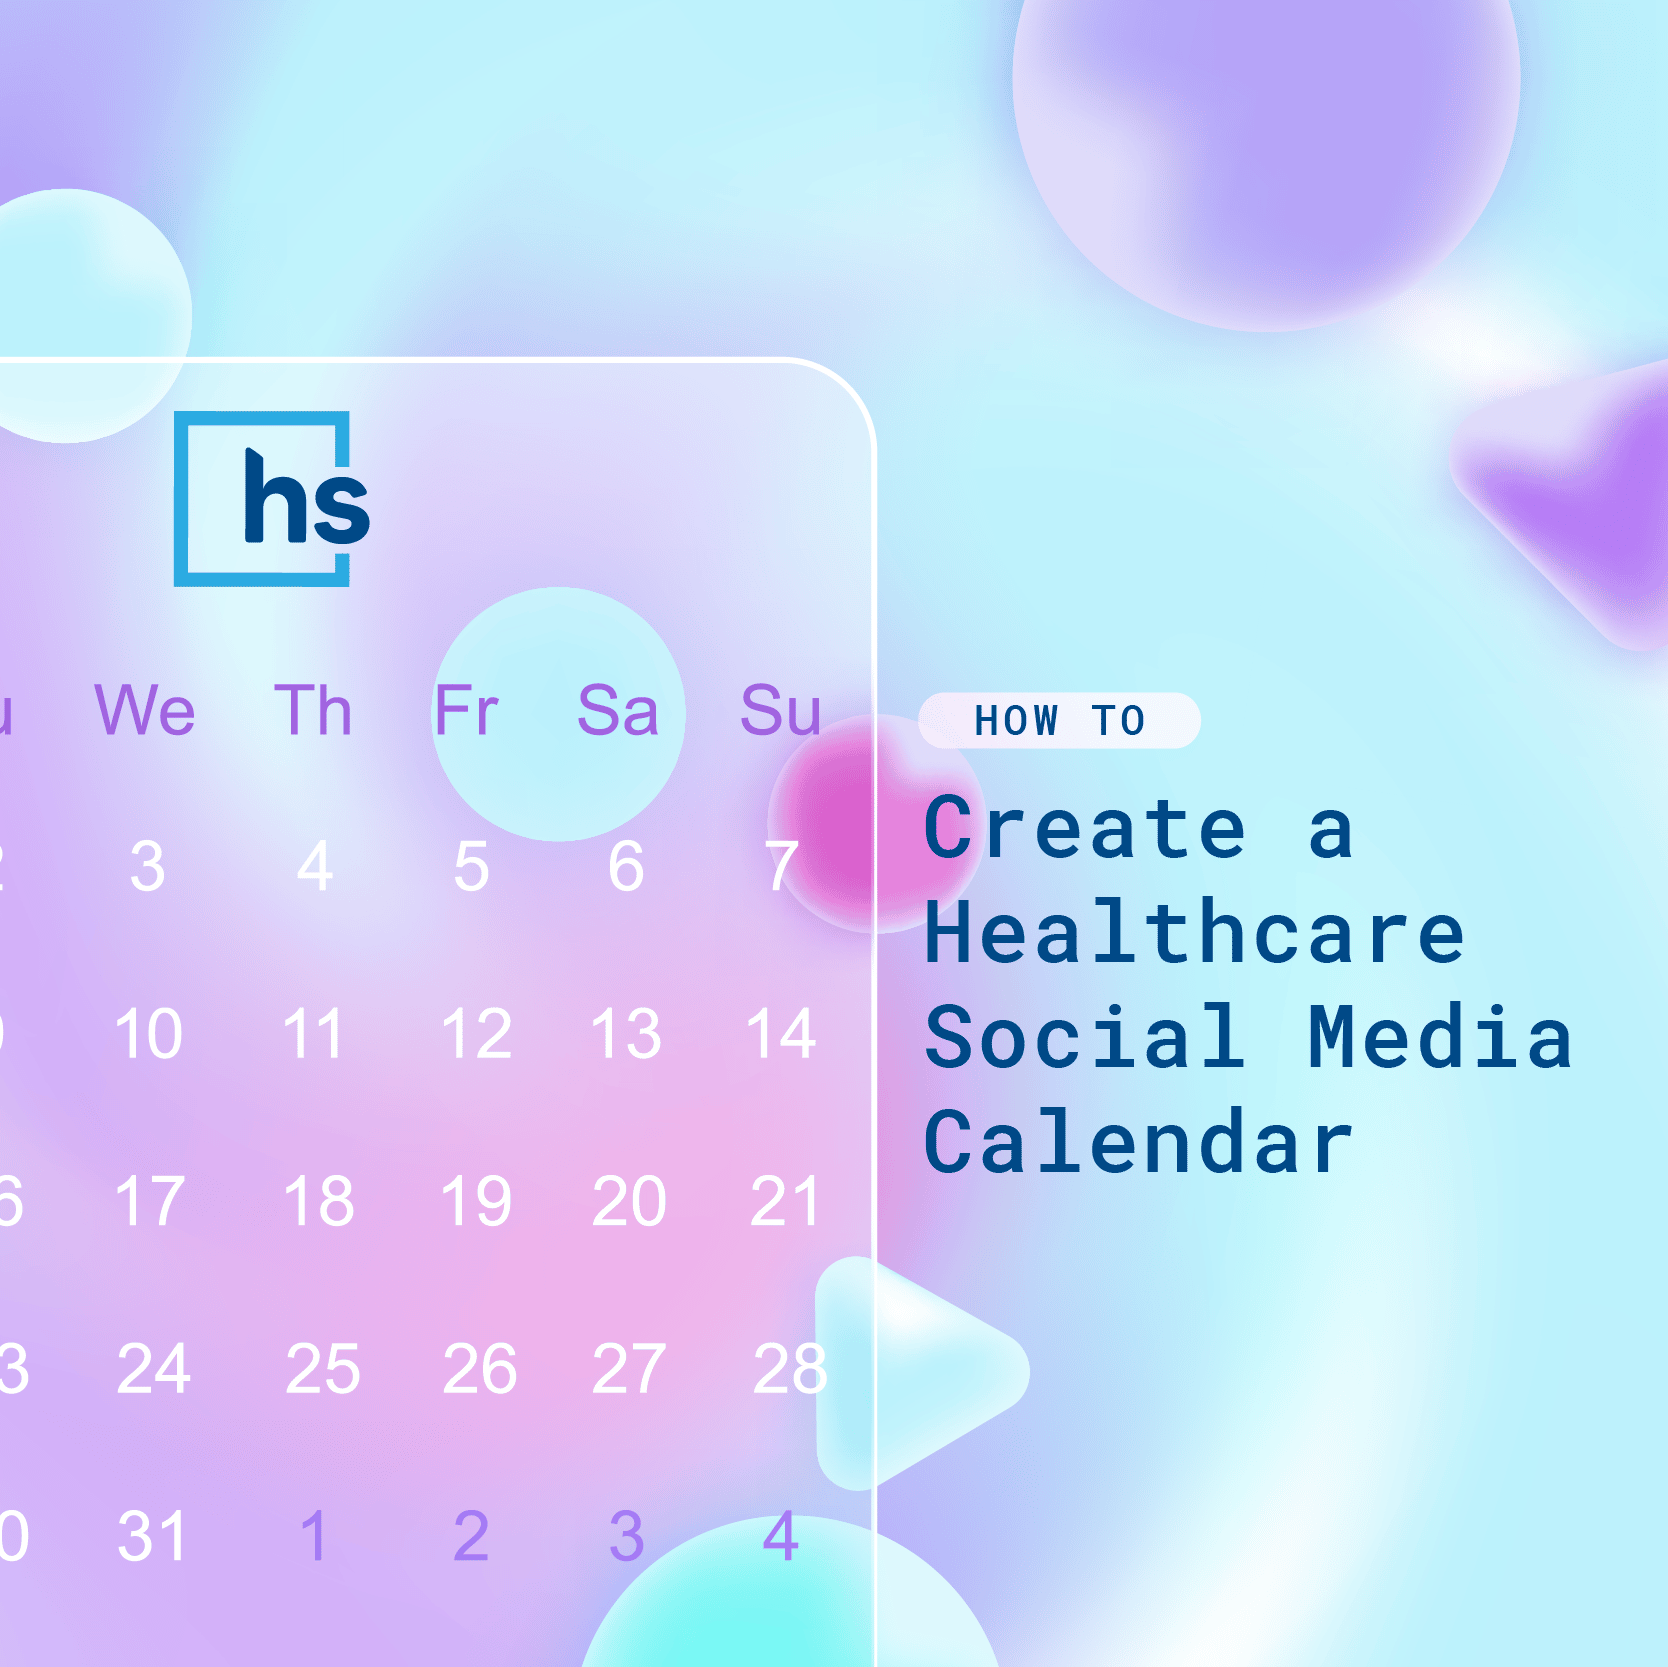 How to Create a Healthcare Social Media Calendar